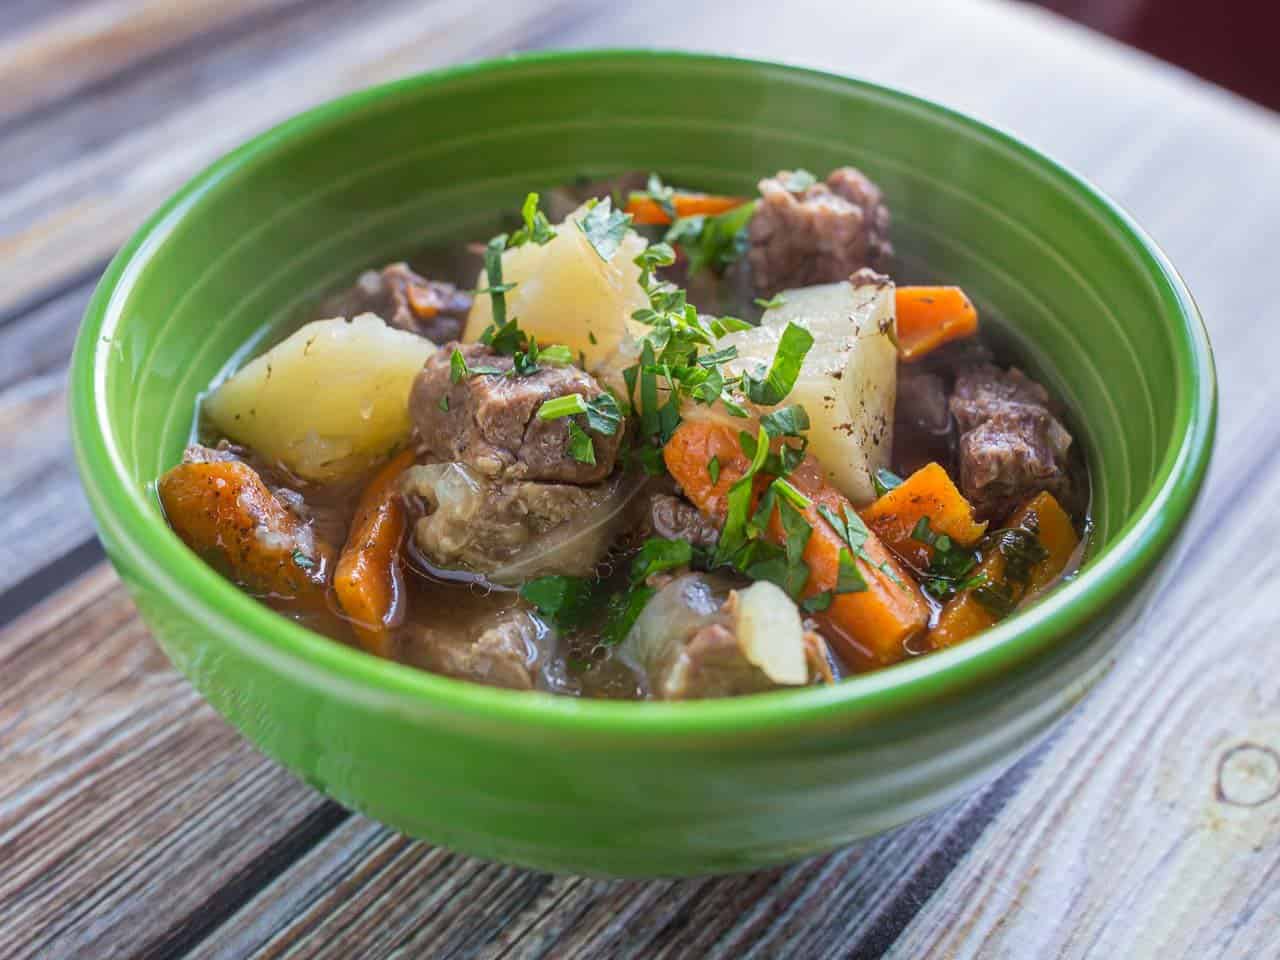 A bowl of lamb stew